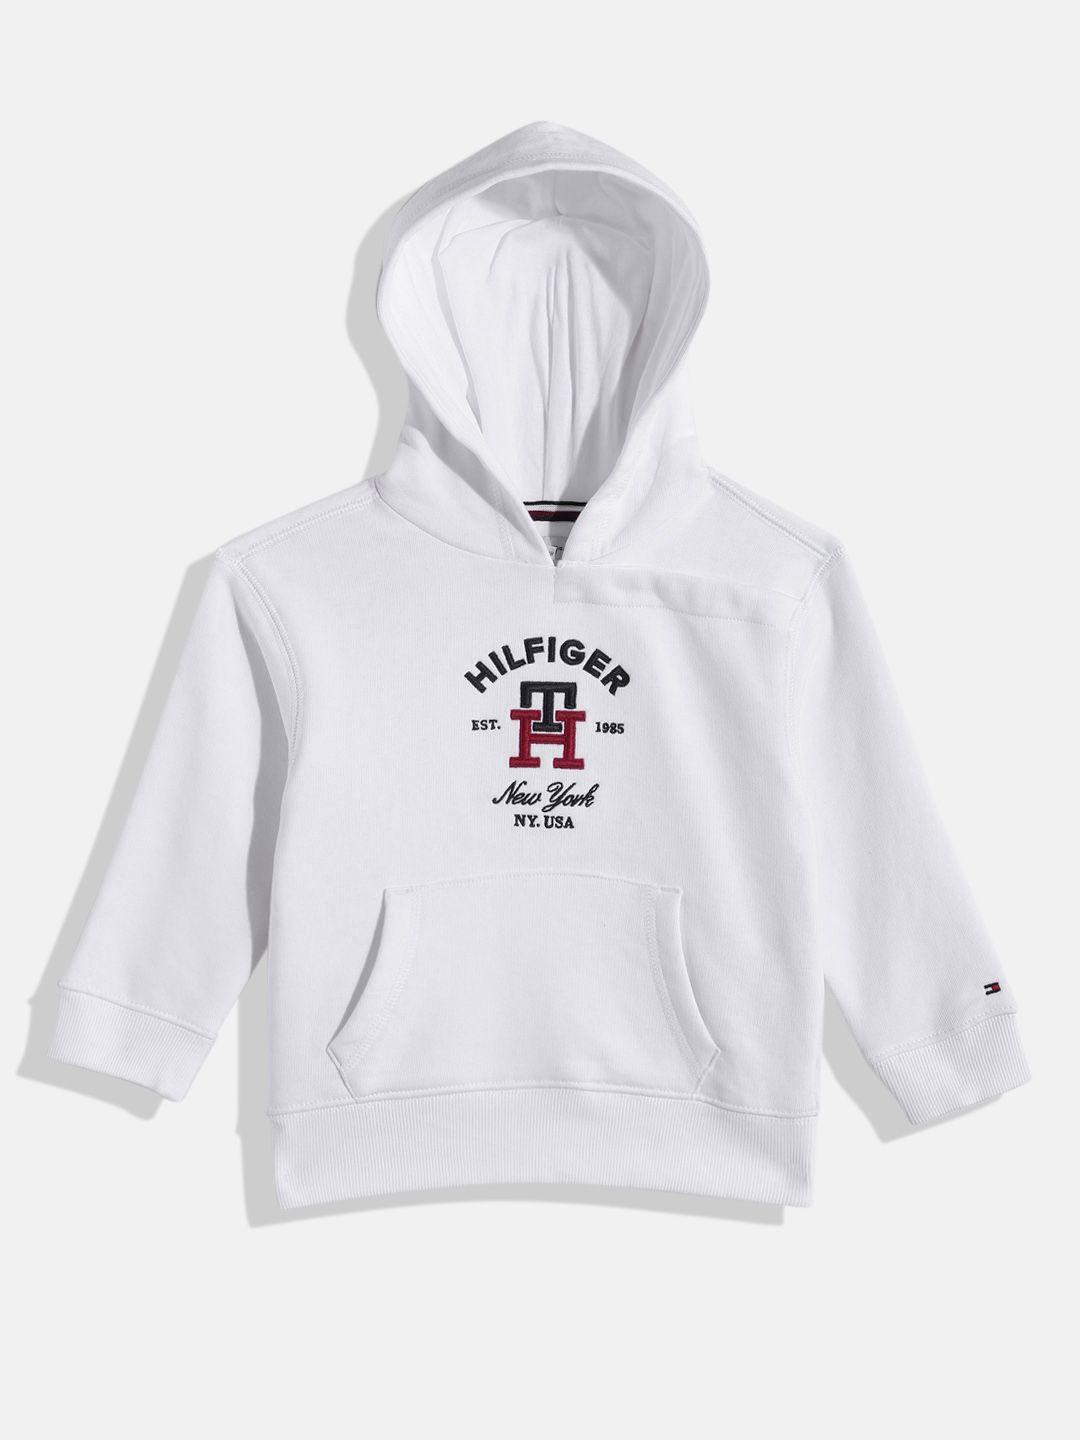 tommy hilfiger boys brand logo embroidered hooded sweatshirt